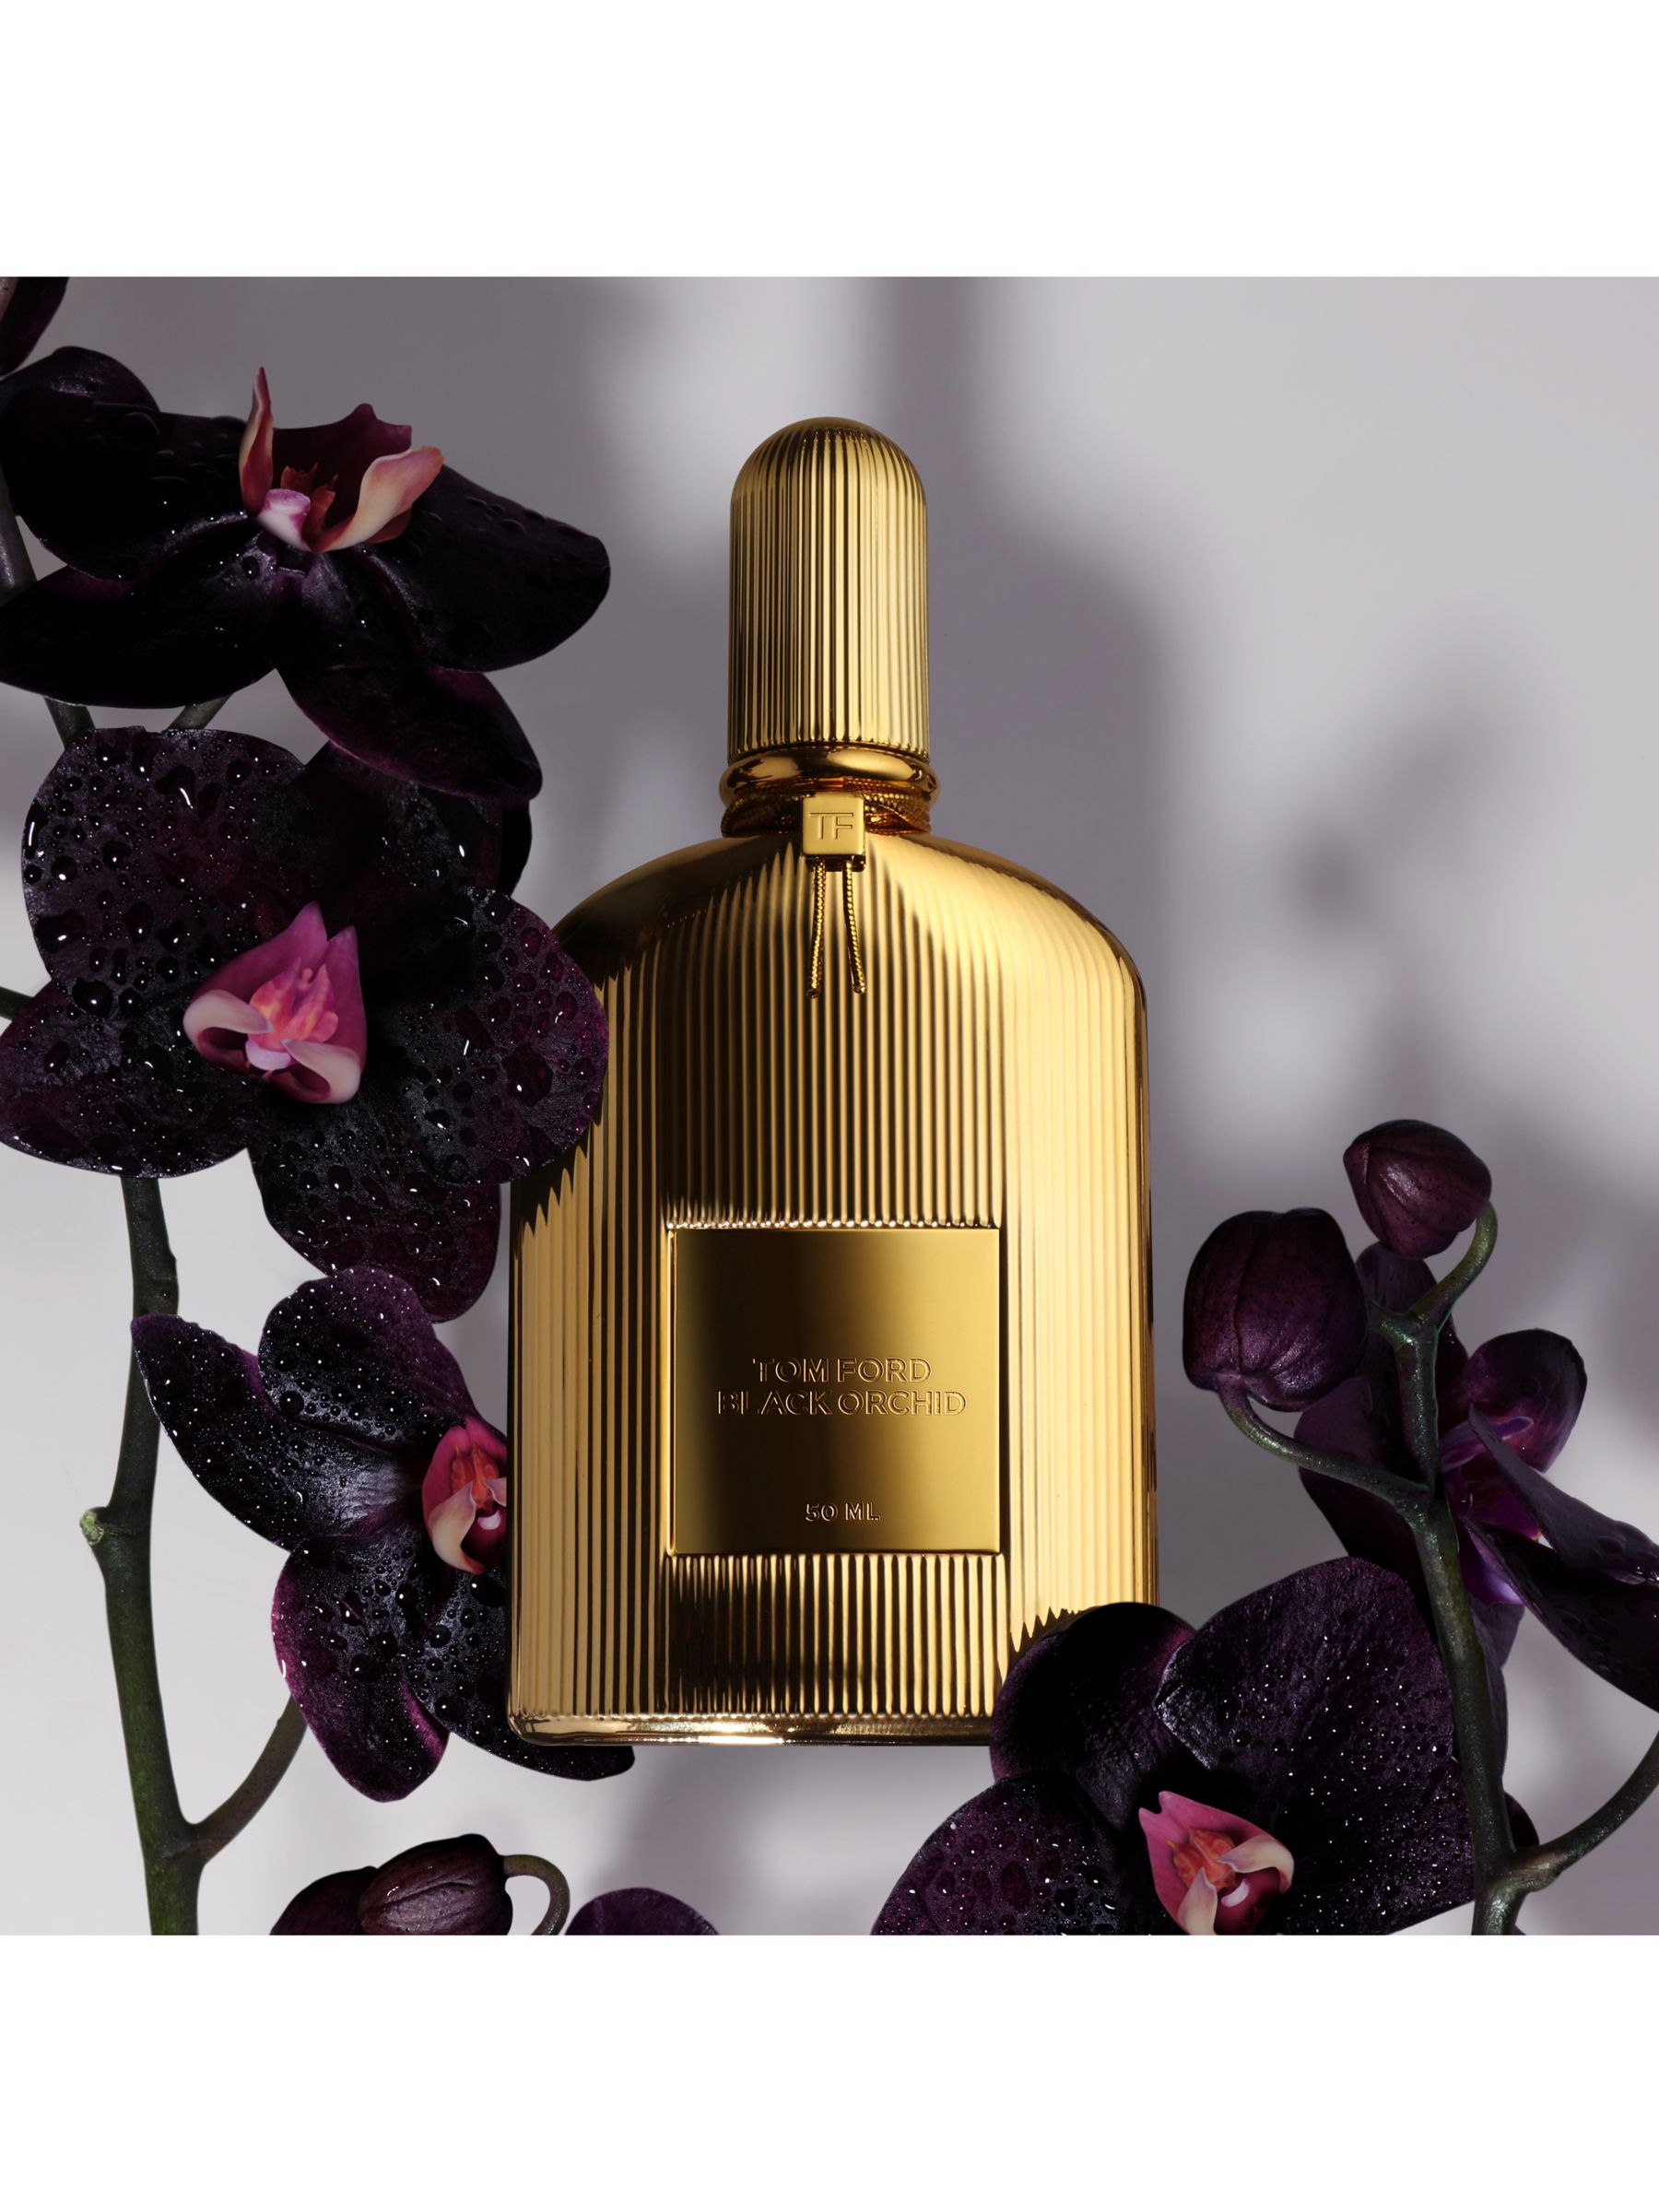 TOM FORD Black Orchid Parfum, 50ml 2